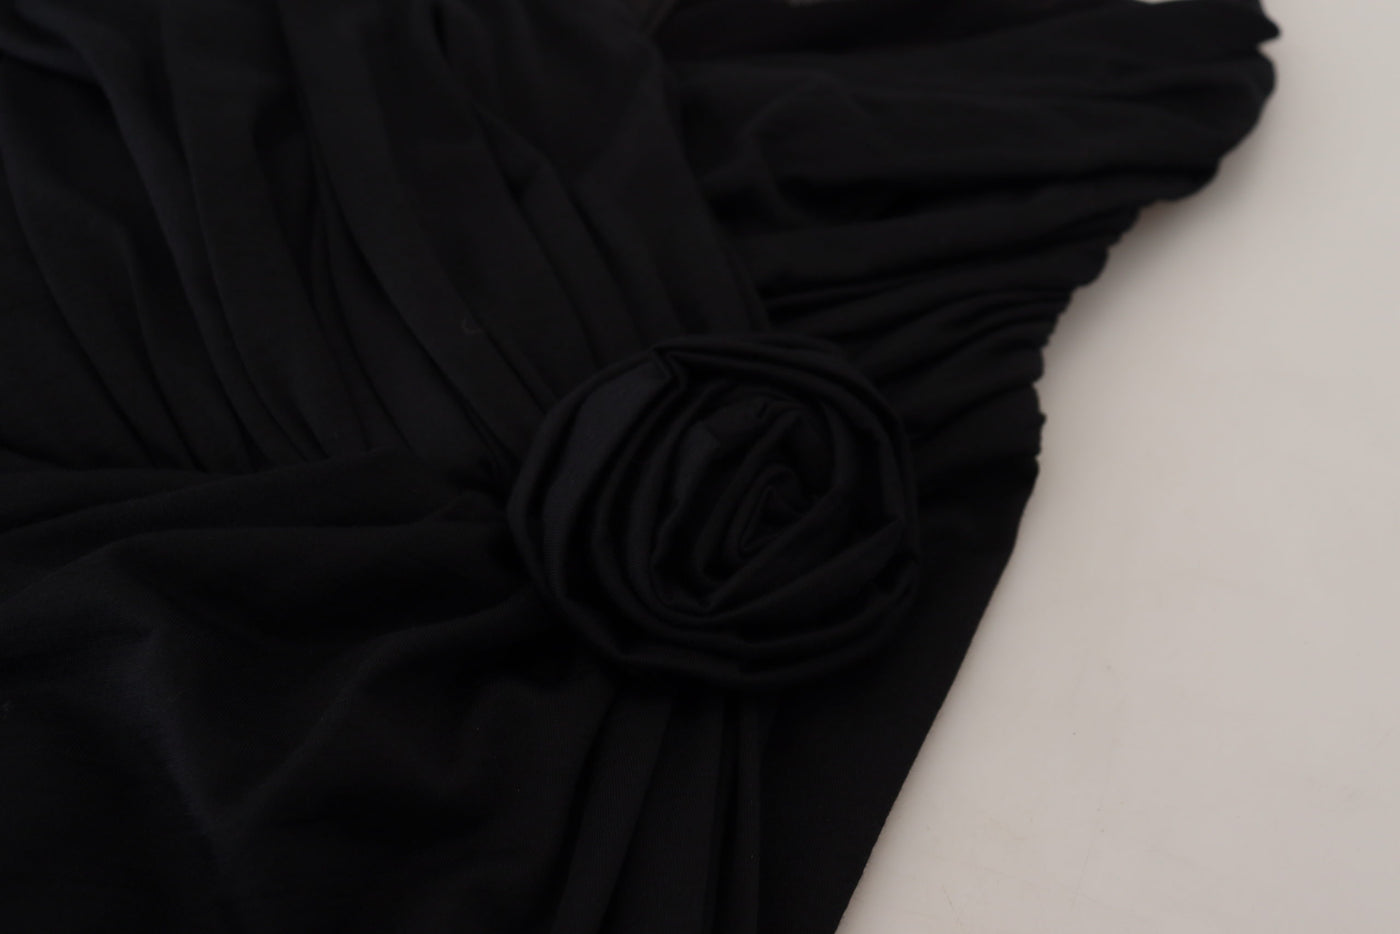 Dolce & Gabbana Black Wrap Sheath Long Gown Wool Dress